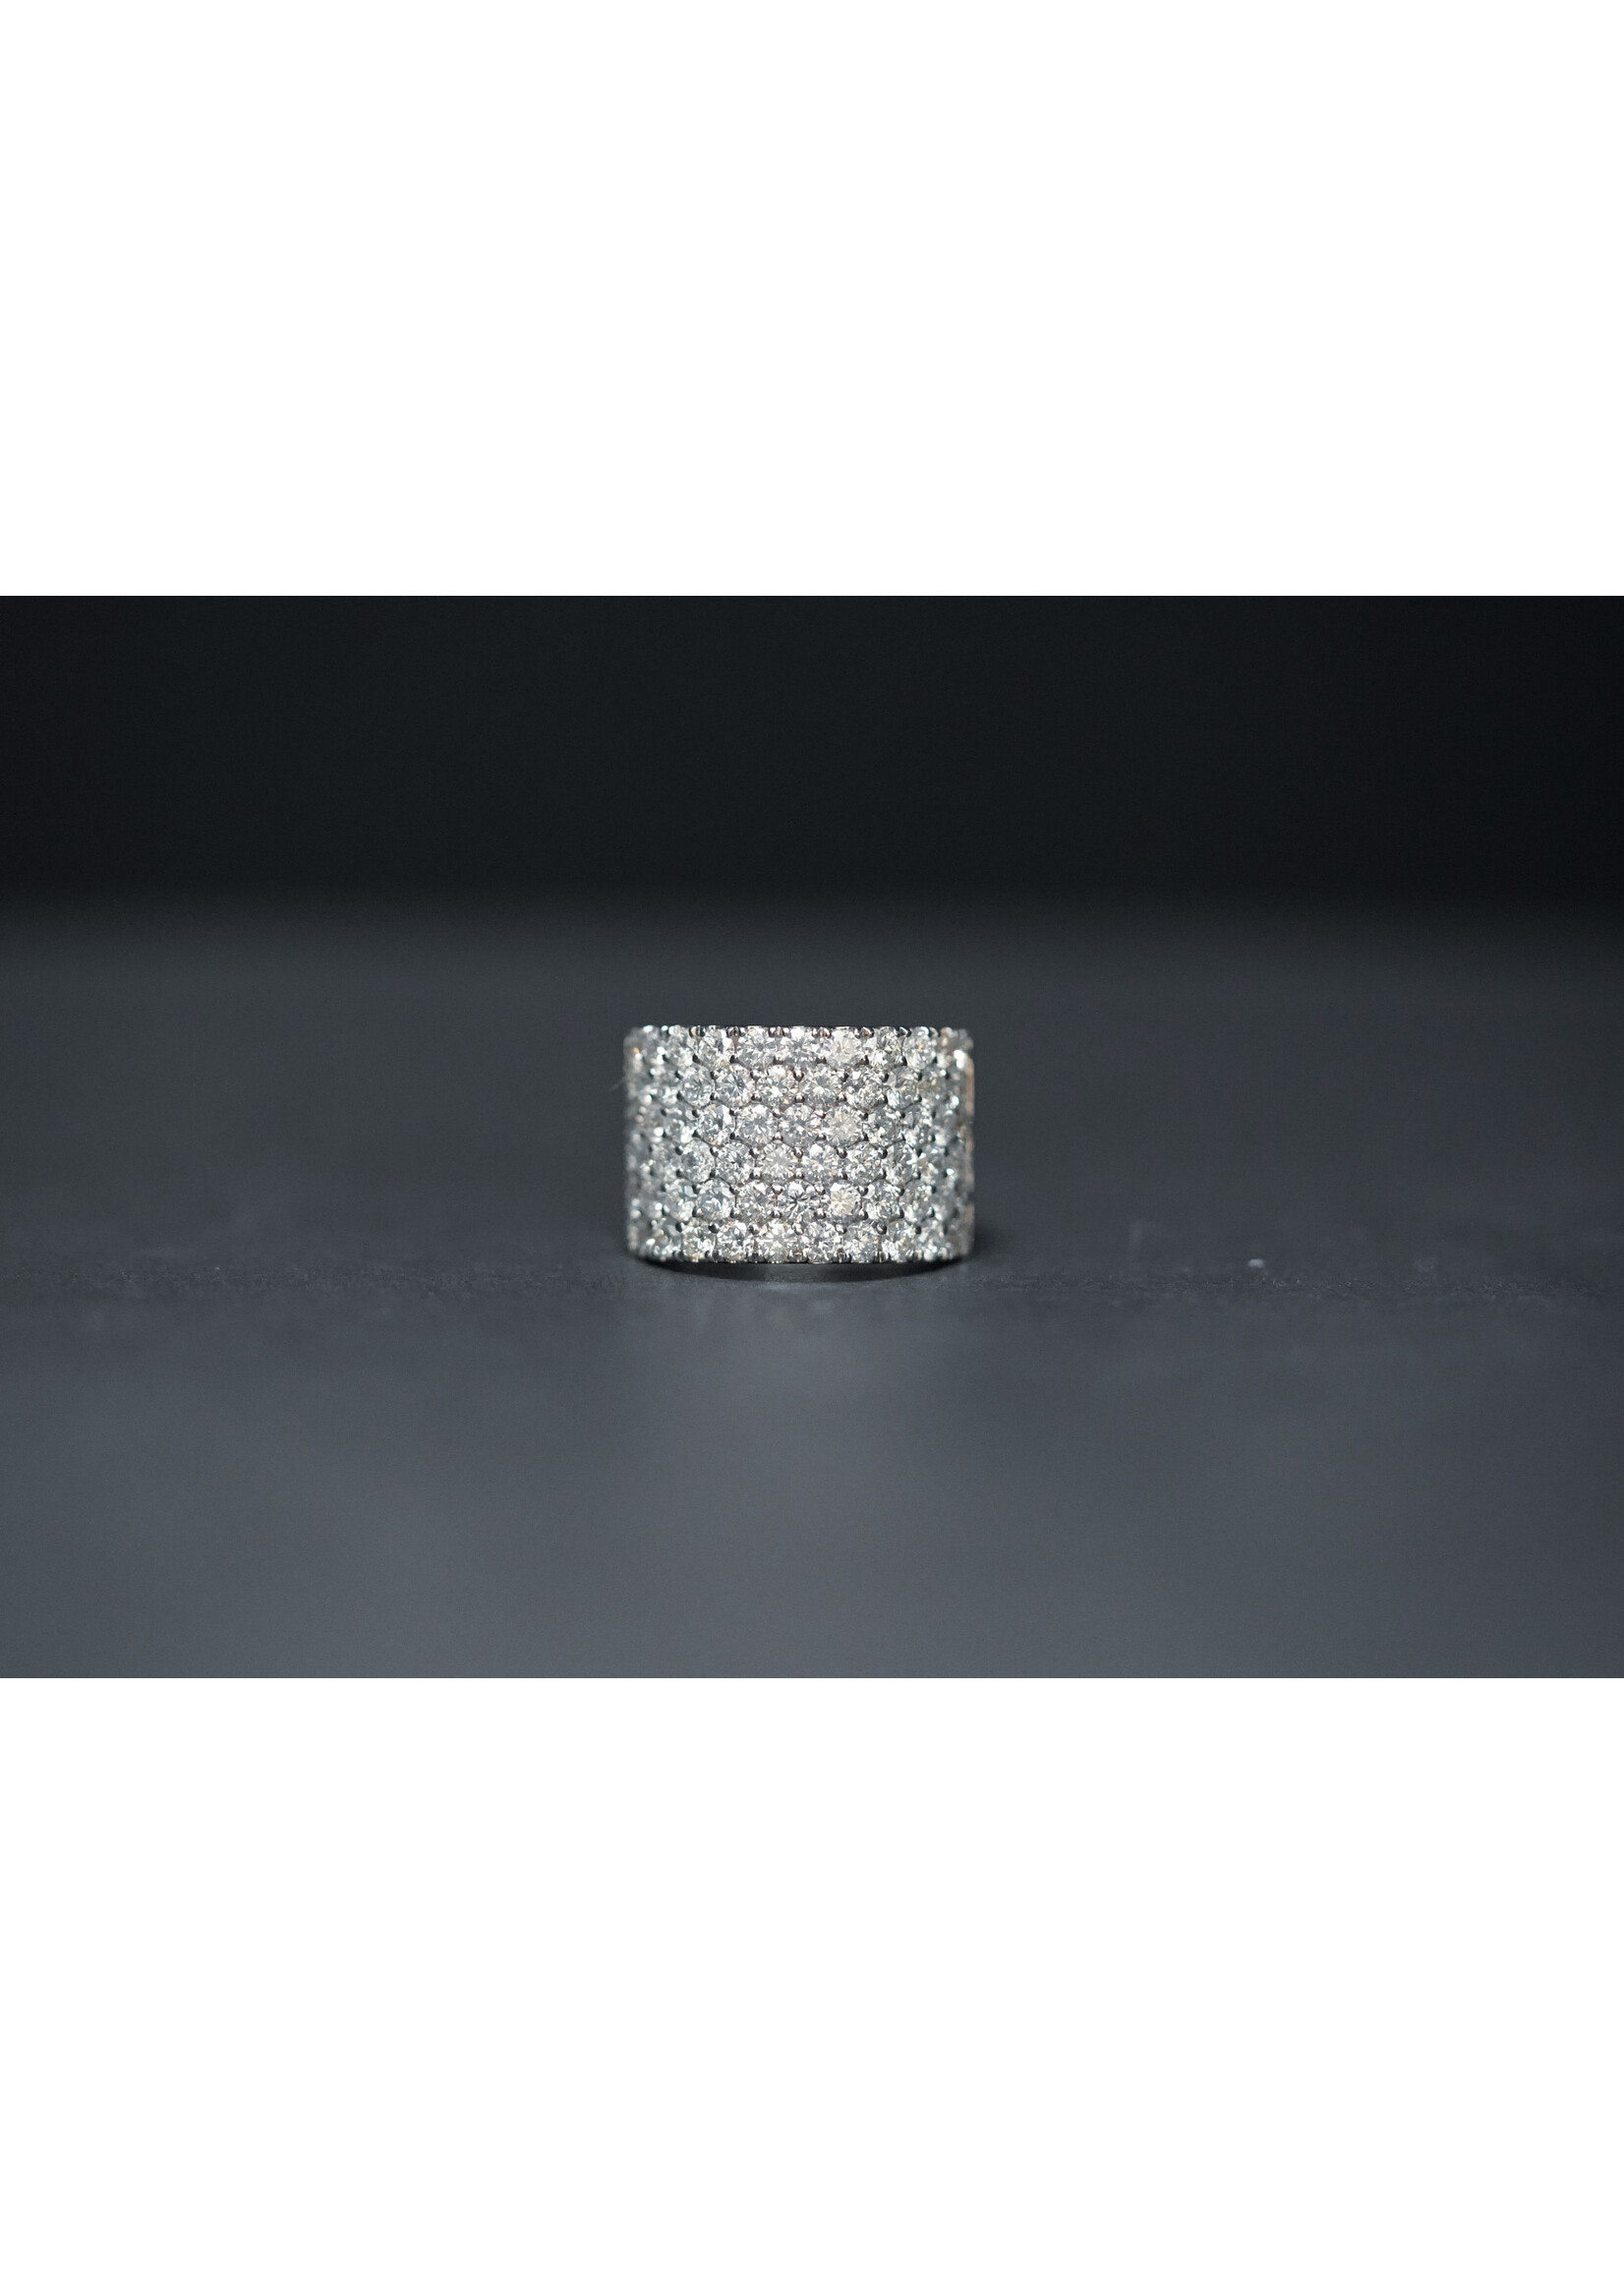 14KW 14.50g 3.71ctw Wide Diamond Fashion Ring (size 6.75)